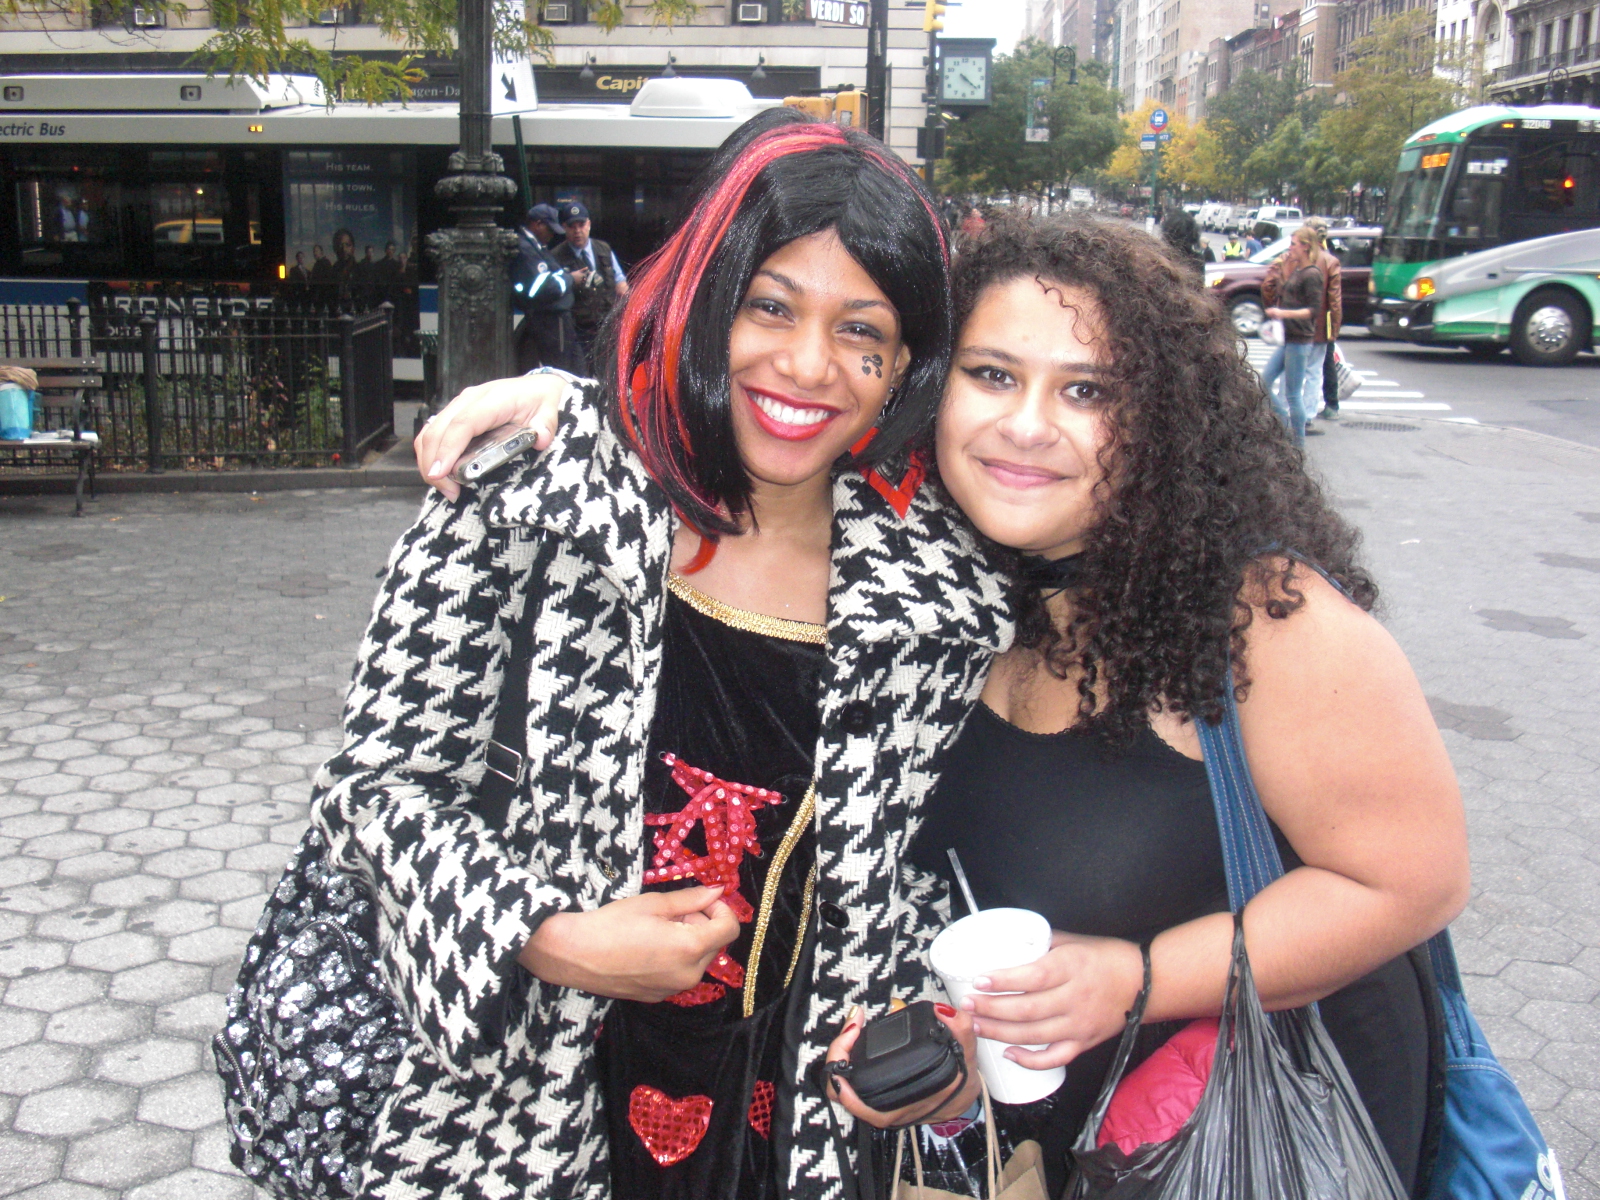 Maylynn with her friend on Halloween 2013.